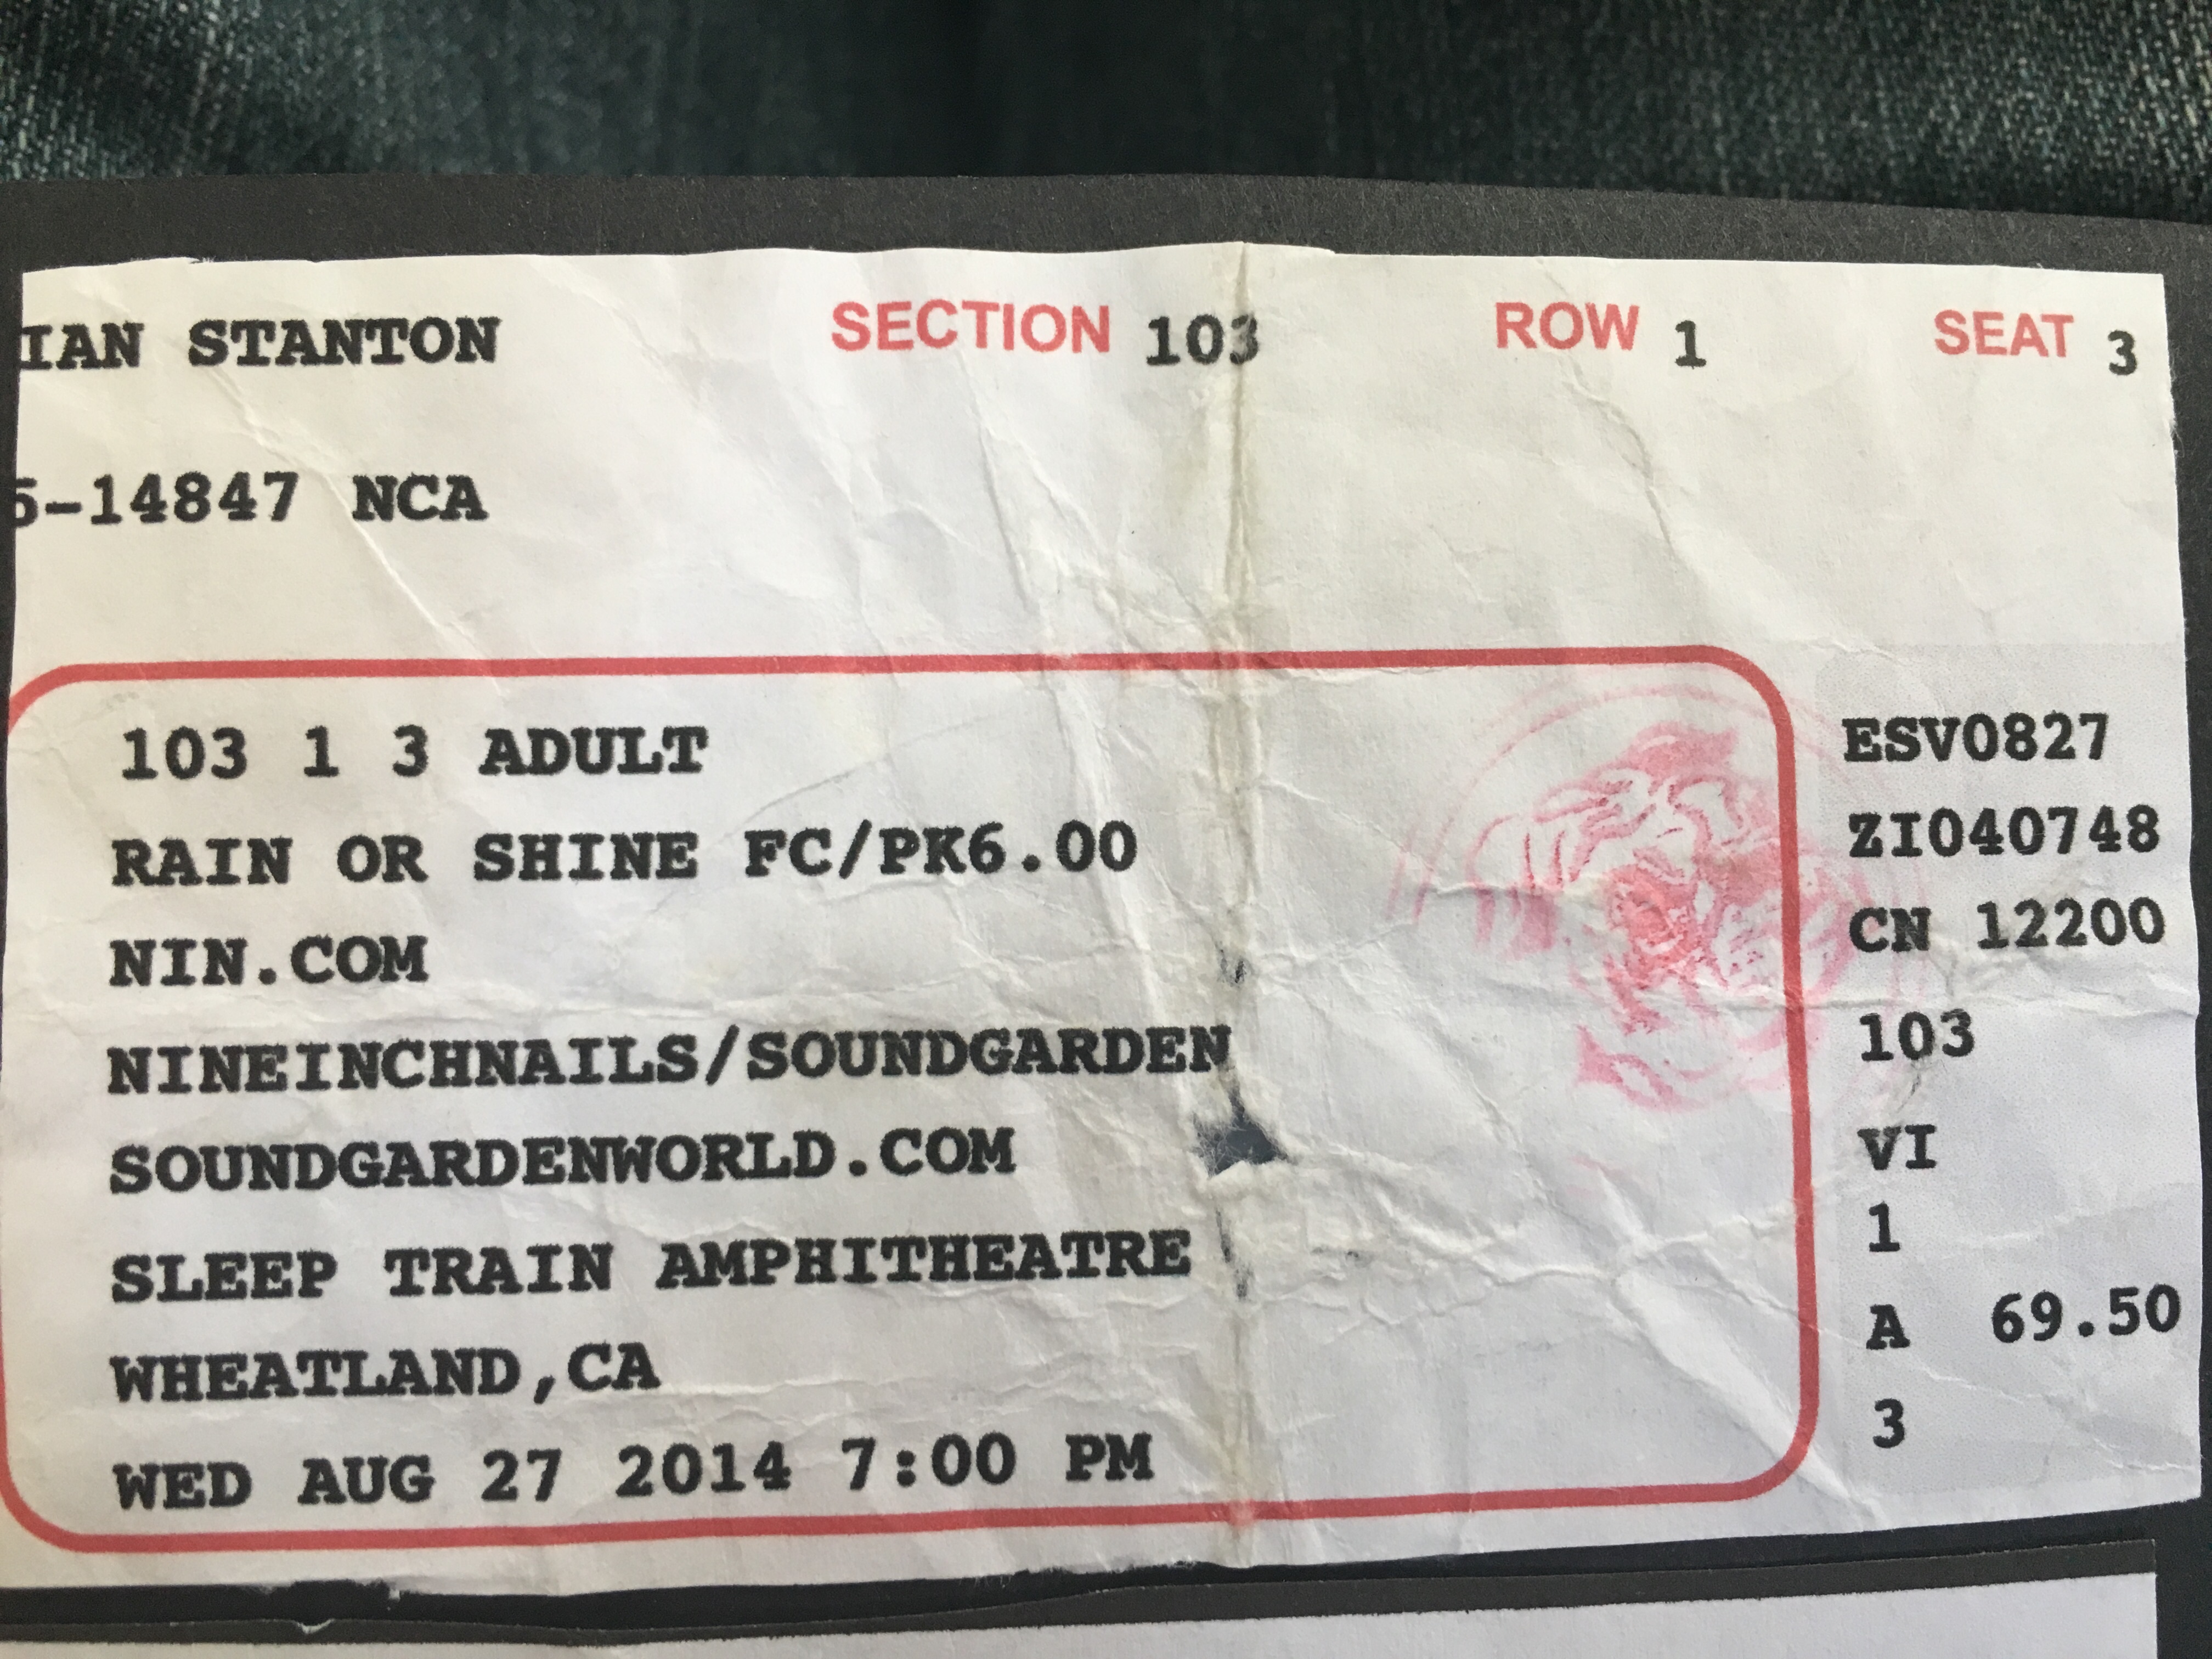 2014/08/27 Ticket